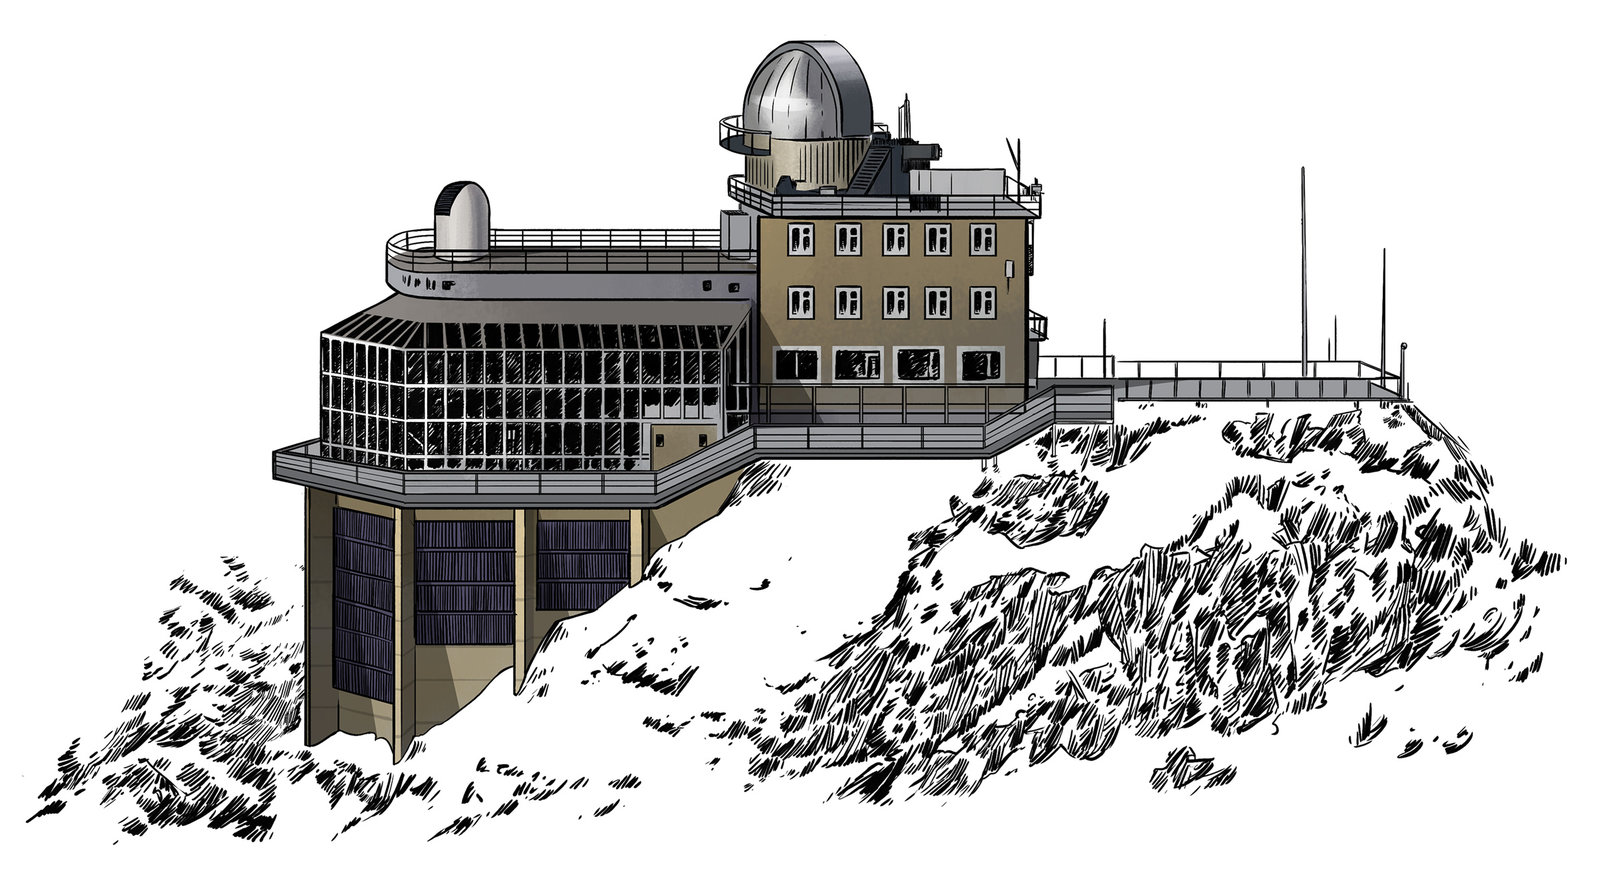 oculus-illustration-scnat-chemical-landmarks-observatorium